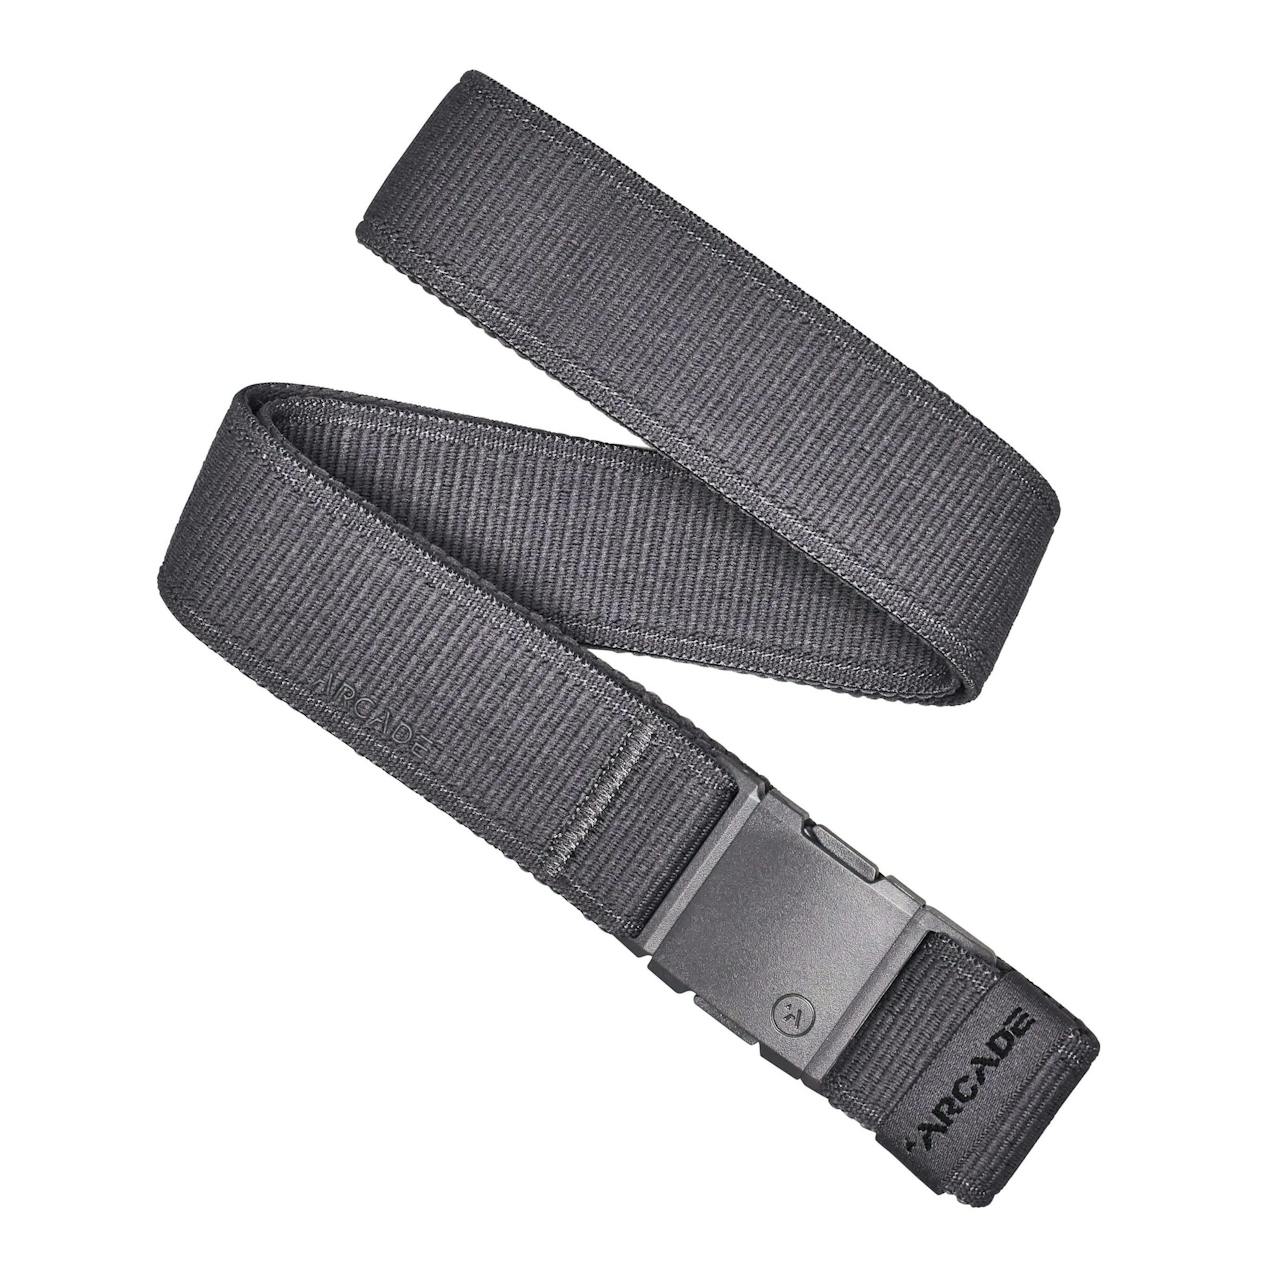 Belts | Co. Huckberry Arcade - Atlas | Charcoal Belt - Belt Performance Stretch